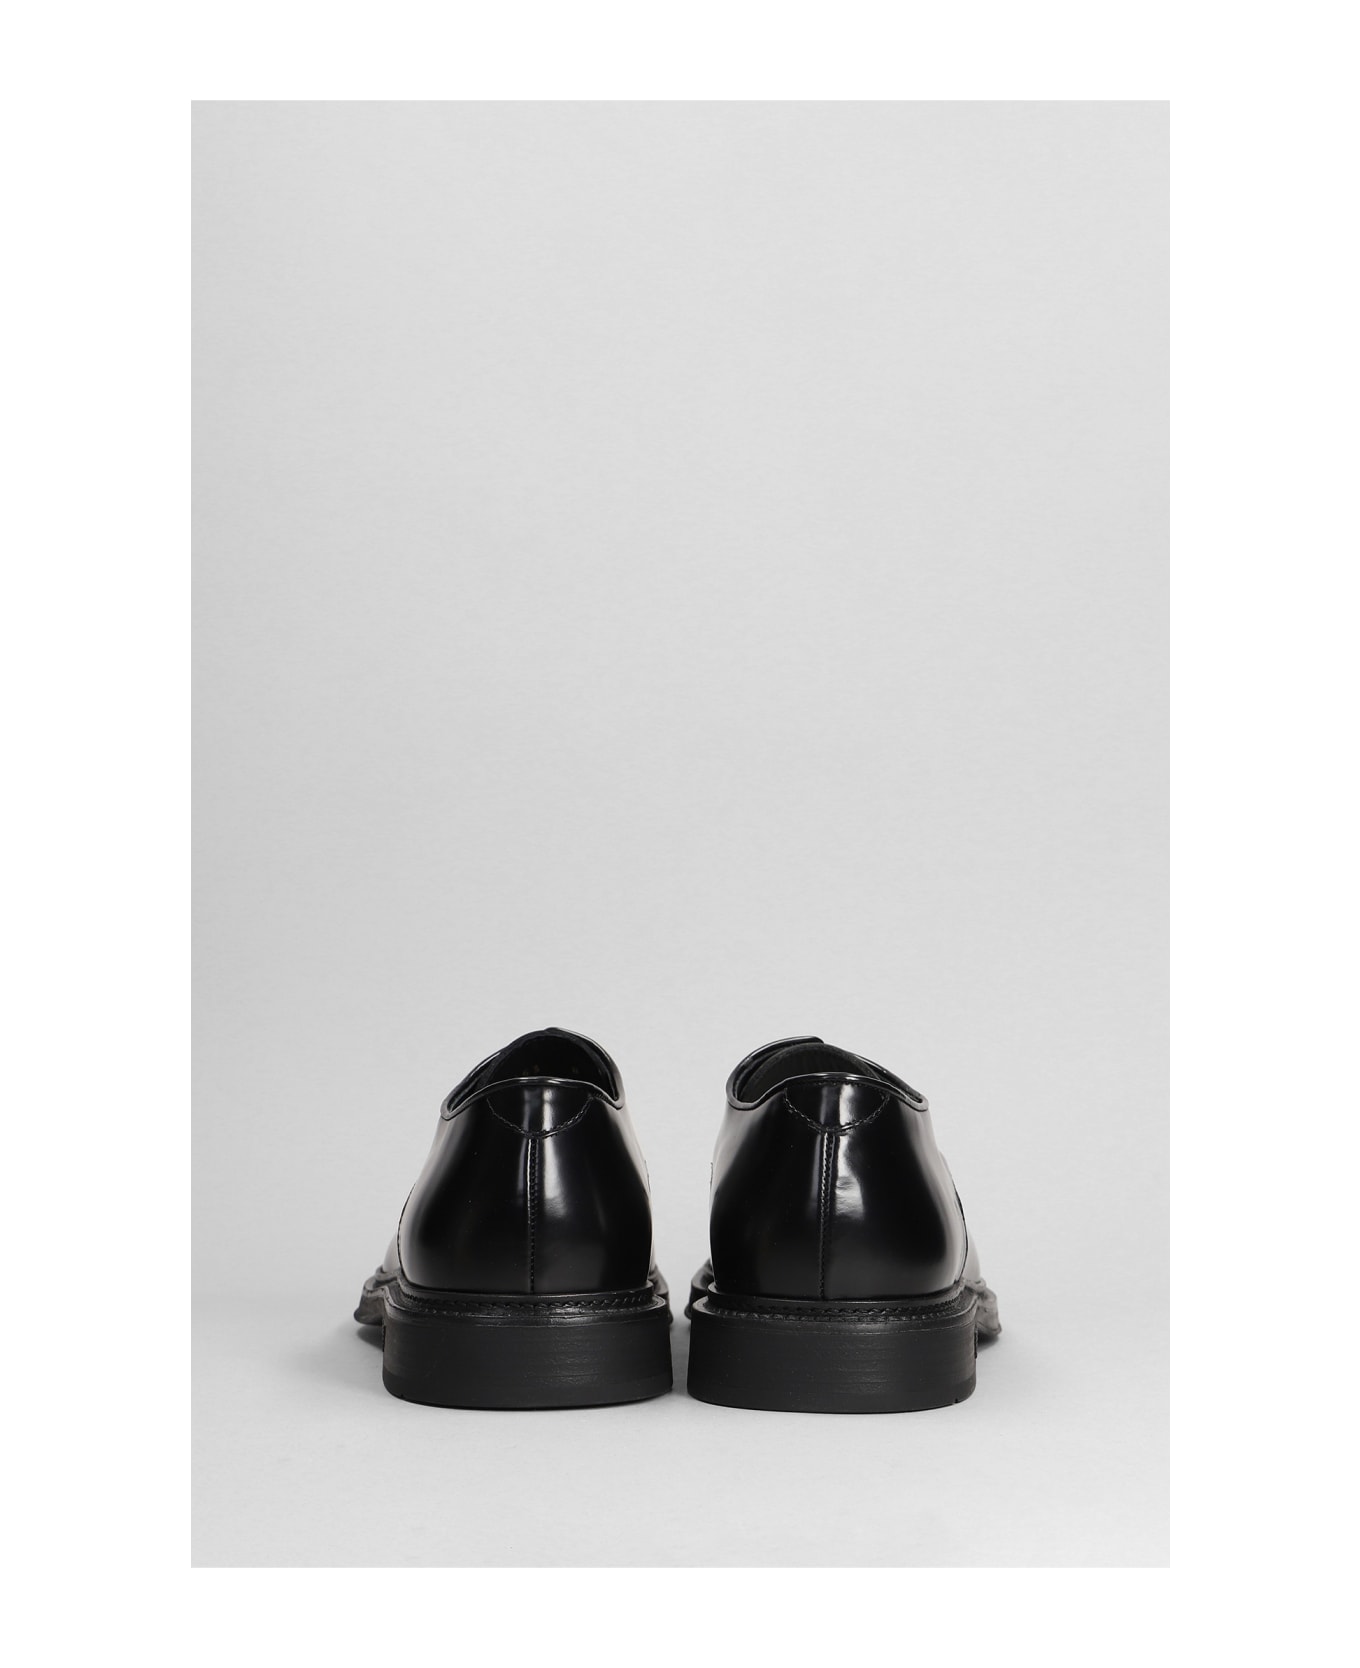 Emporio Armani Leather Derby Shoes - black